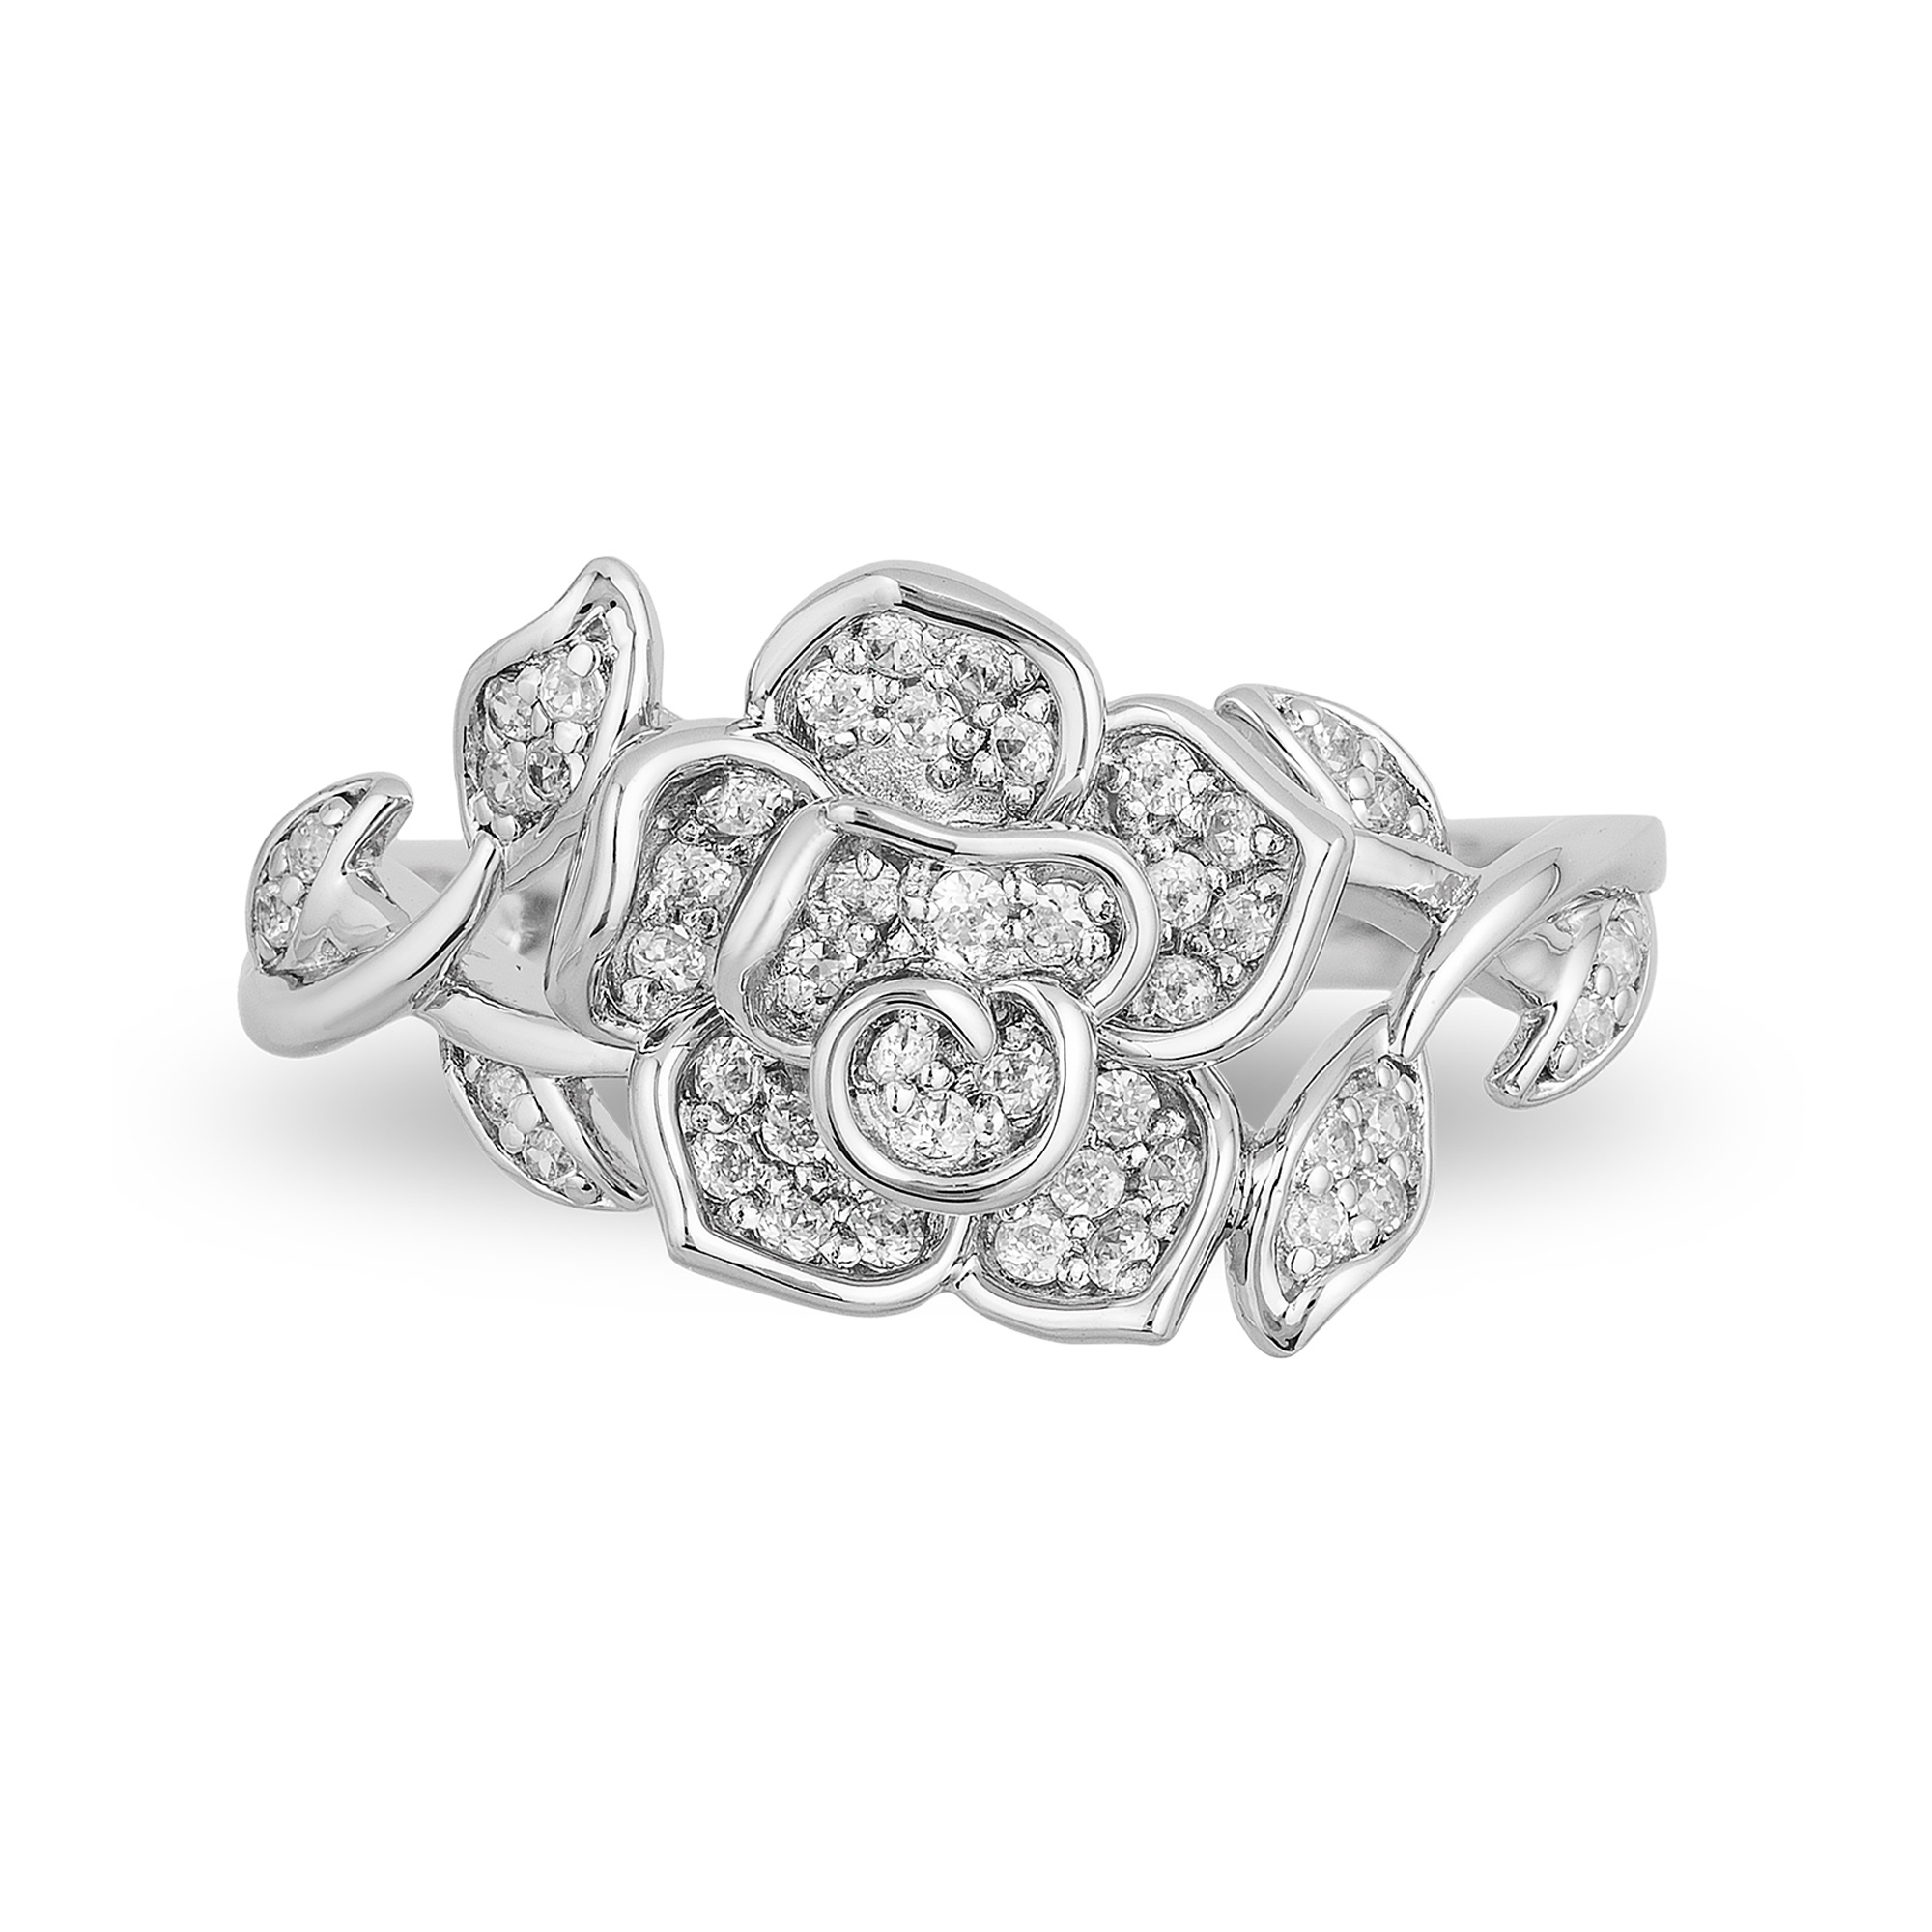 CHANEL, Jewelry, 4karat White Gold Diamond Earrings And Ring Set